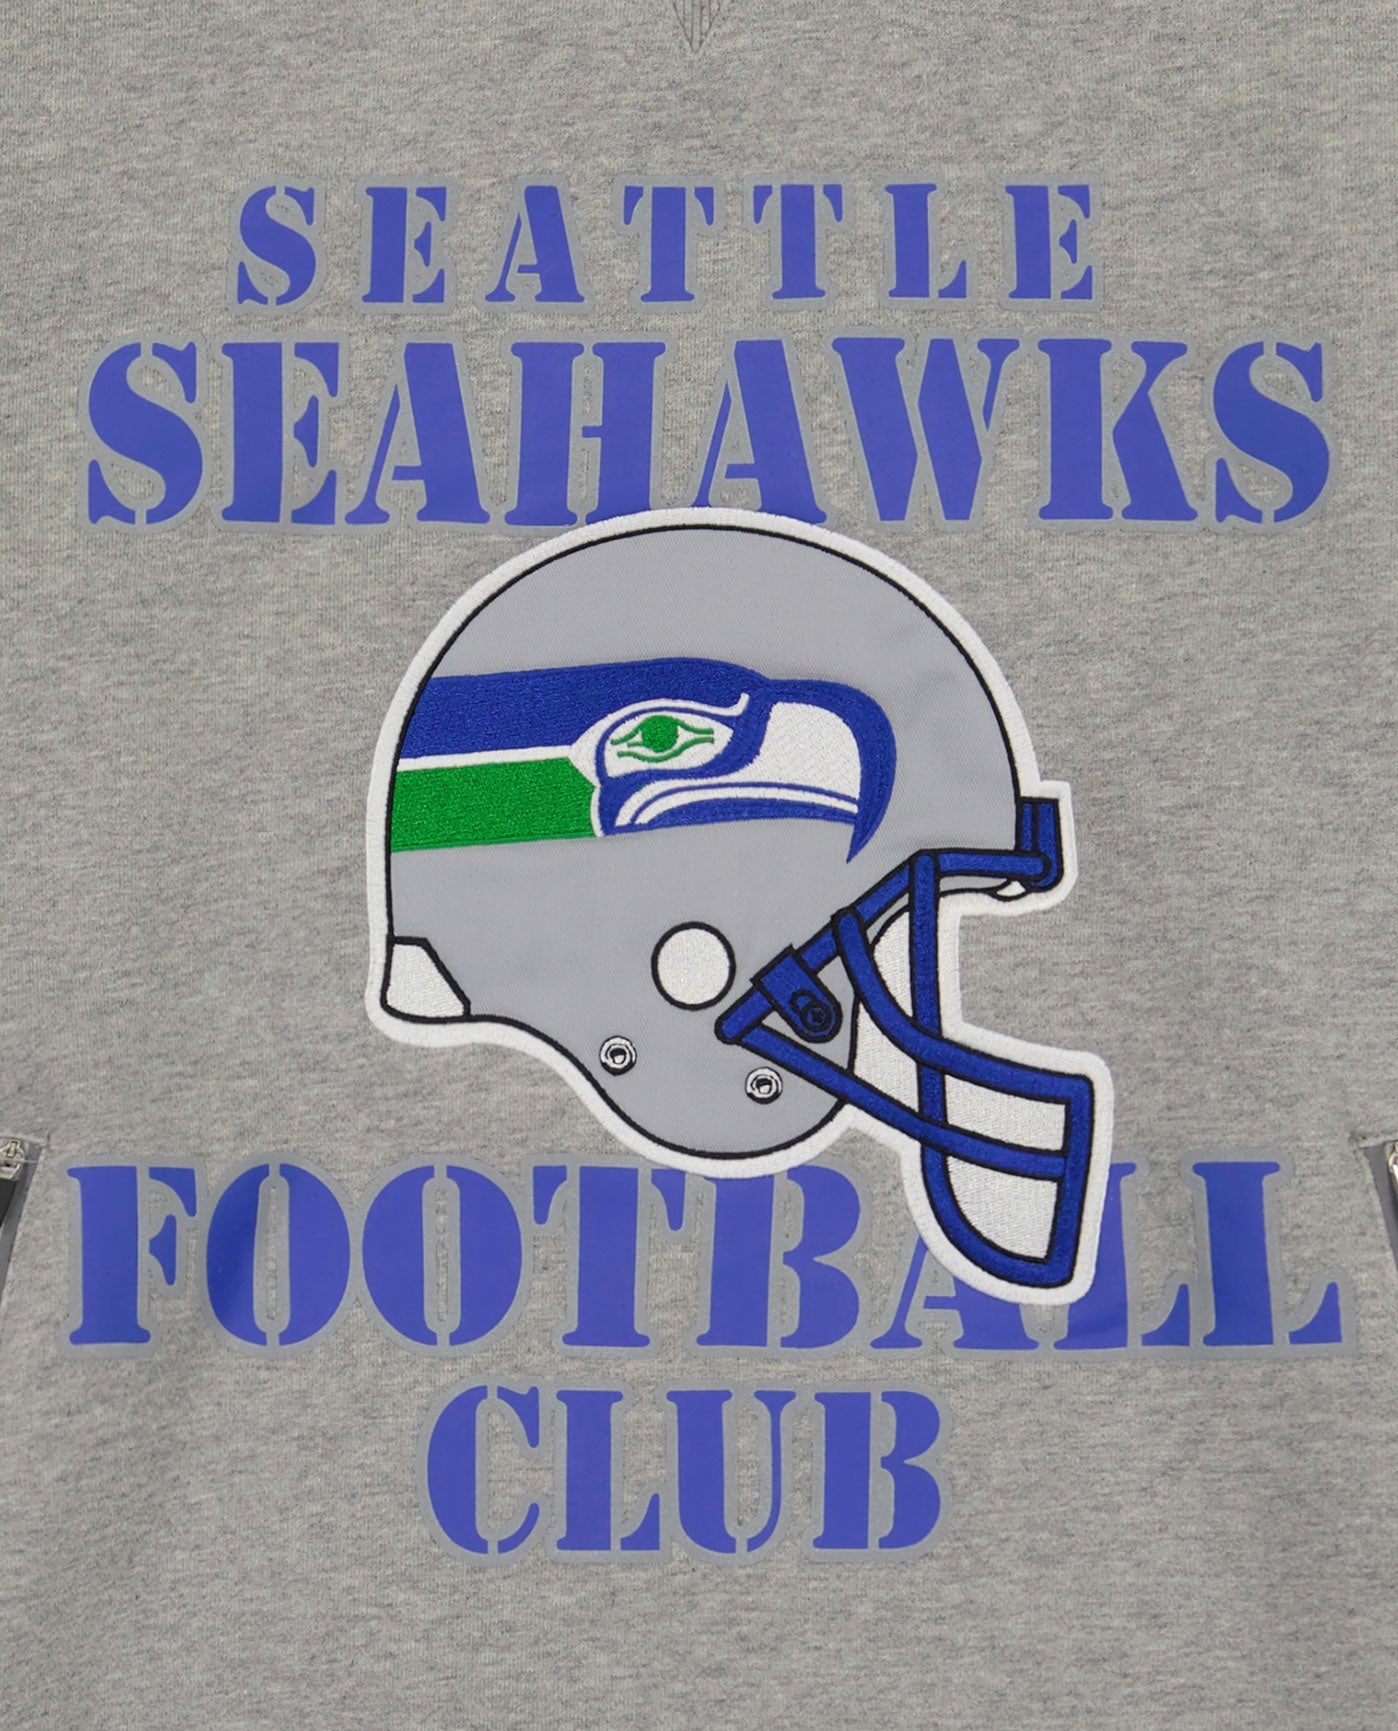 SEATTLE SEAHAWKS FOOTBALL CLUB writing and helmet logo front | Seahawks Heather Grey